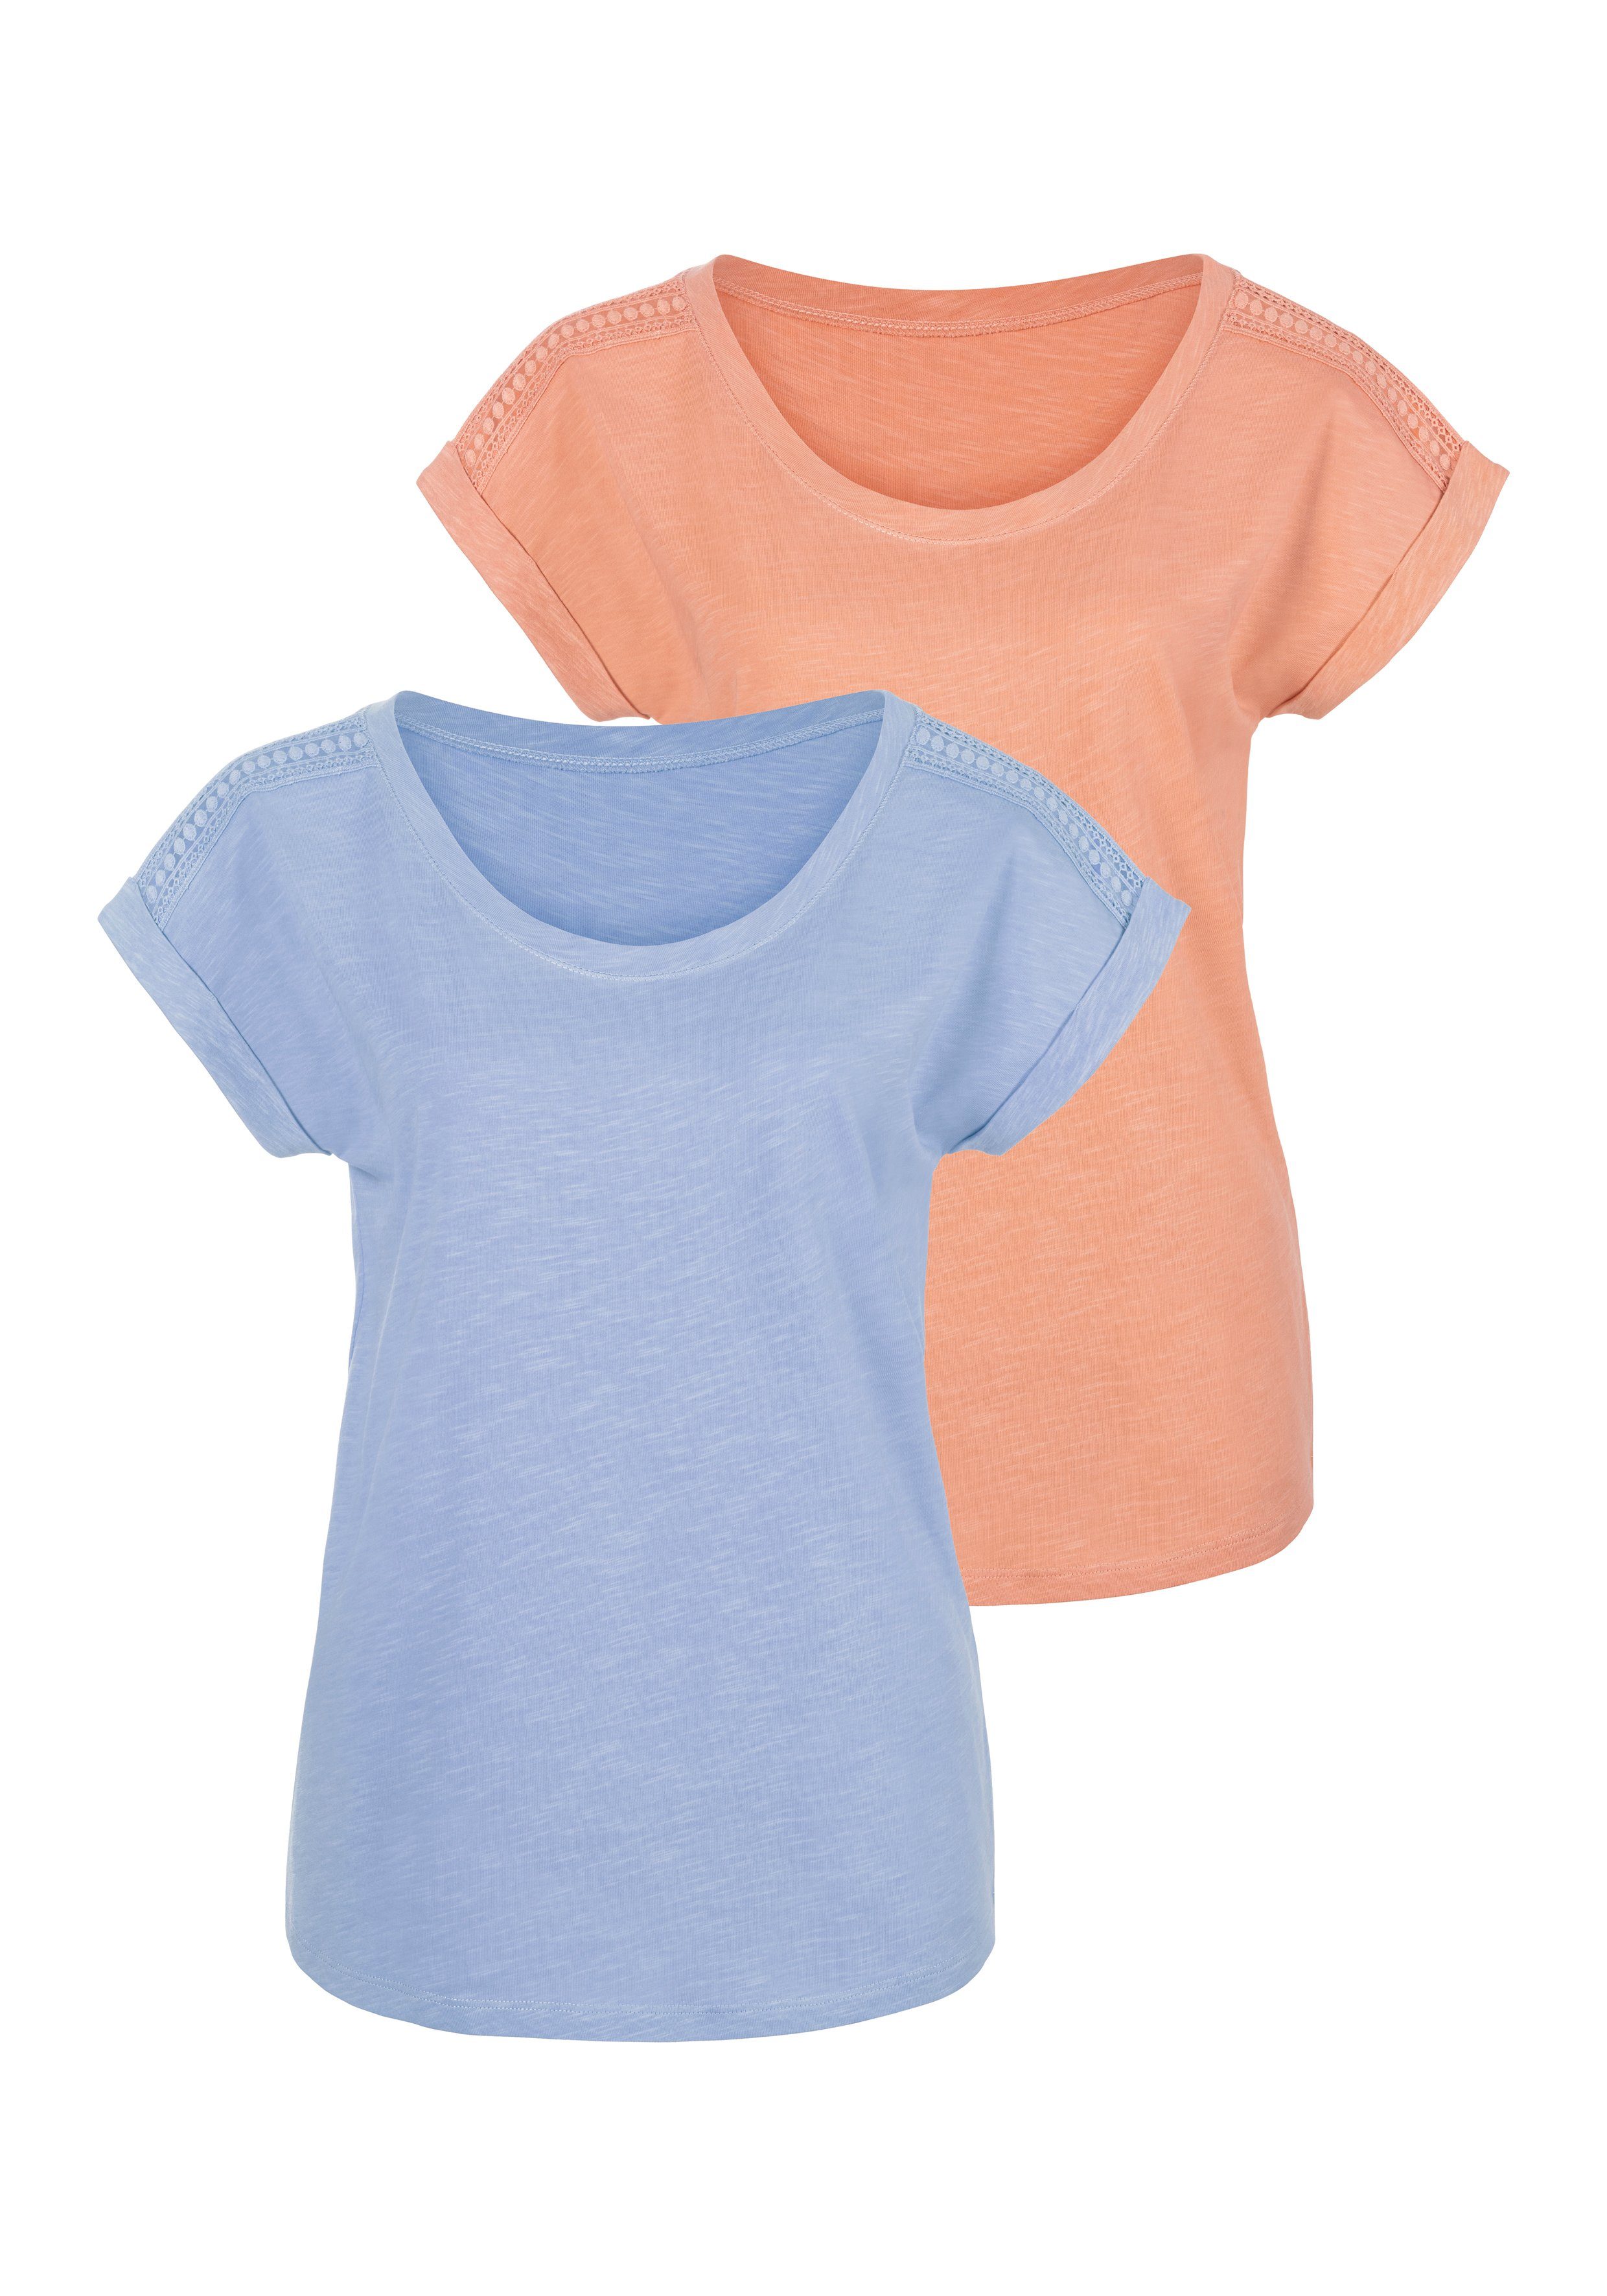 Schulter mit Vivance der T-Shirt 2er-Pack) (Packung, an orange, hellblau Häkelspitze